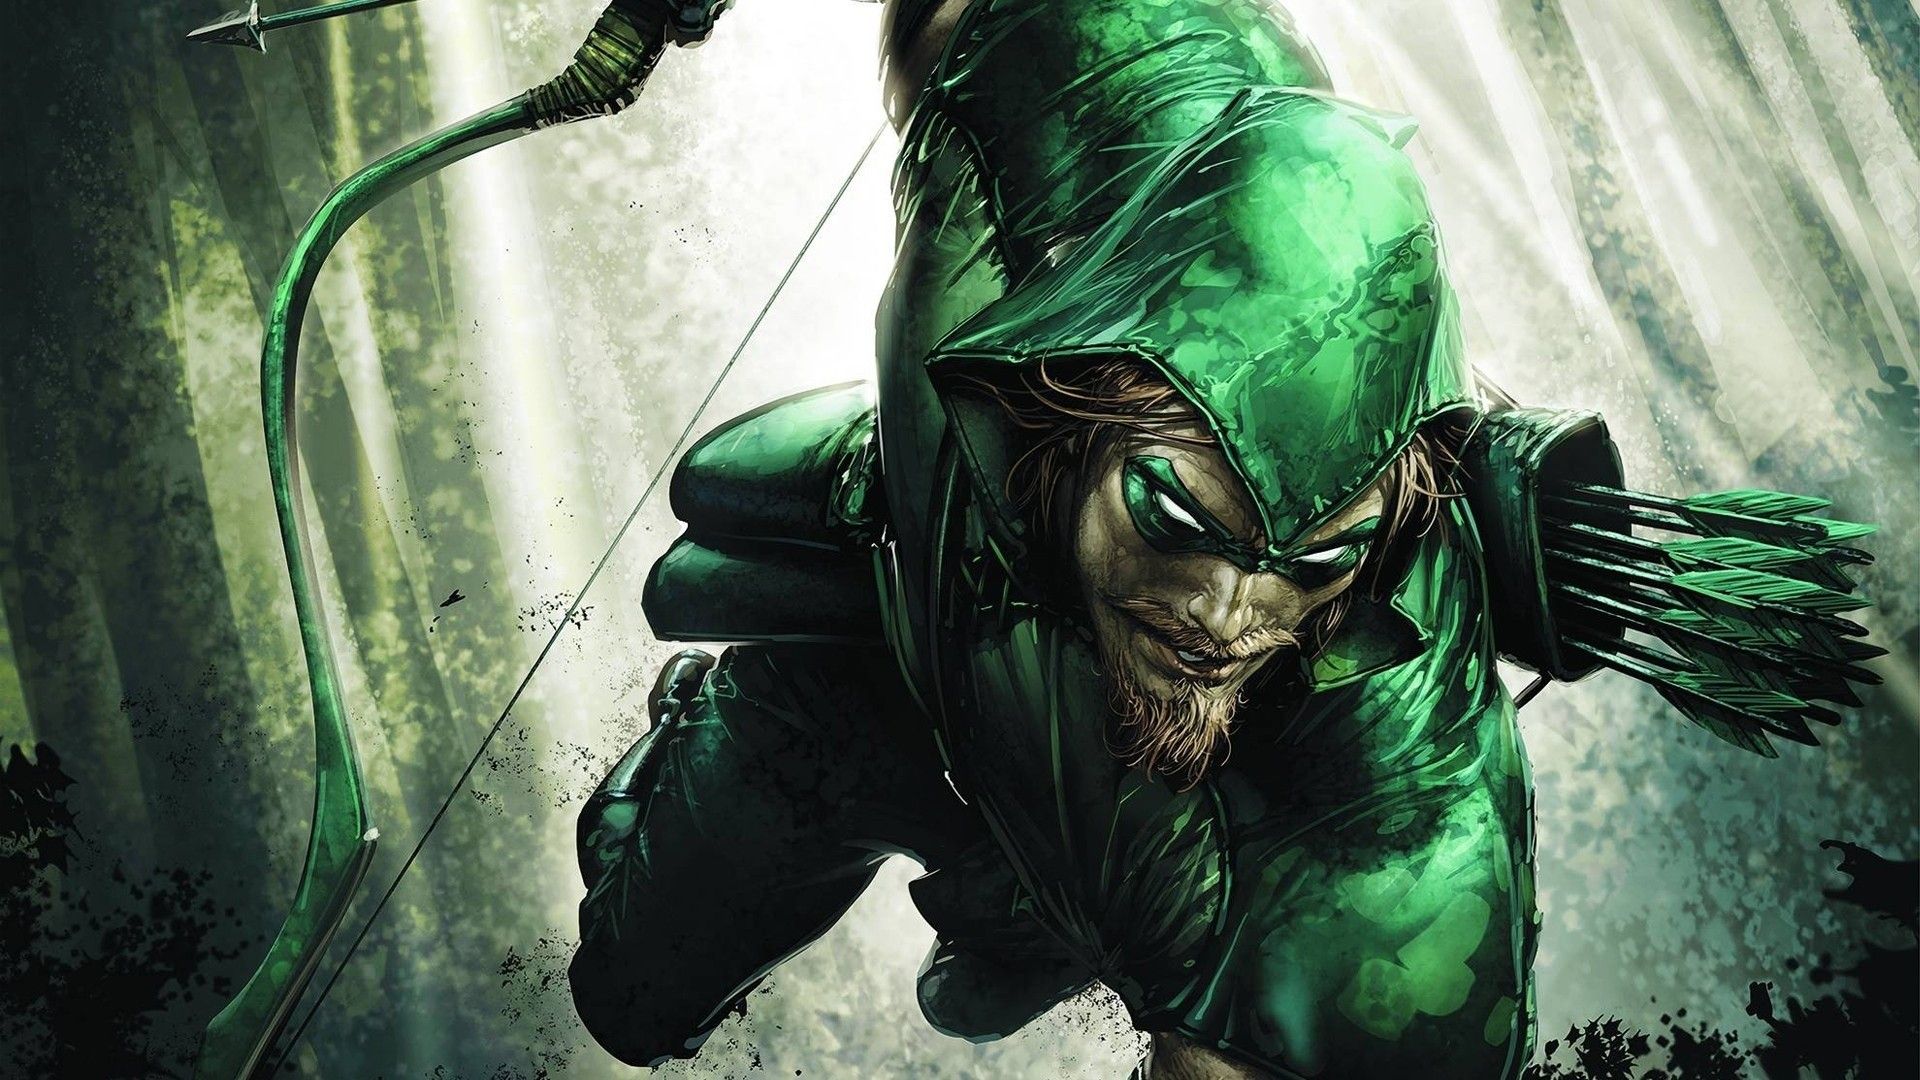 Free download Green Arrow Wallpapers Top Green Arrow Backgrounds